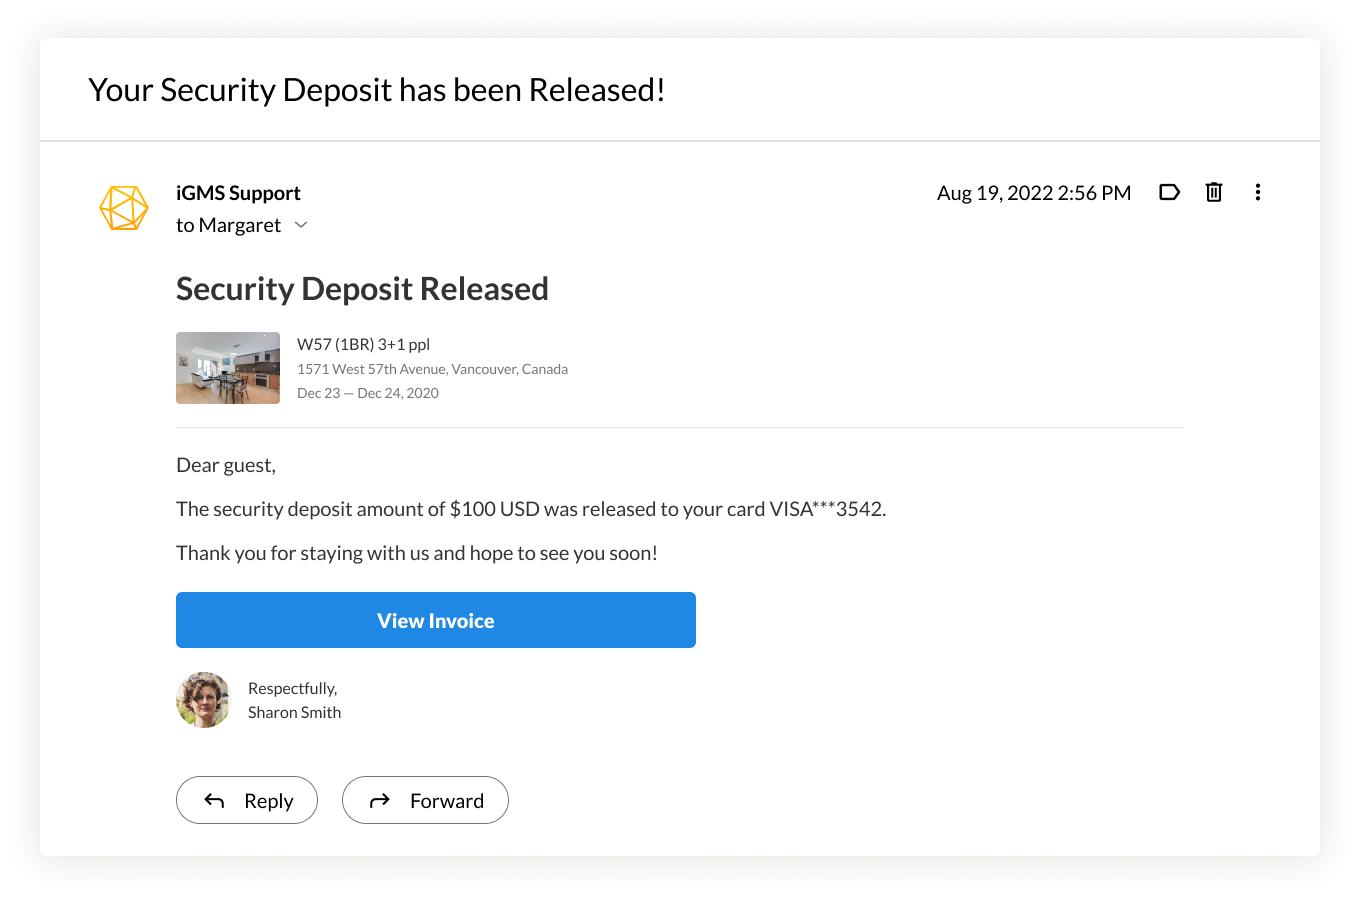 Release security deposit notification